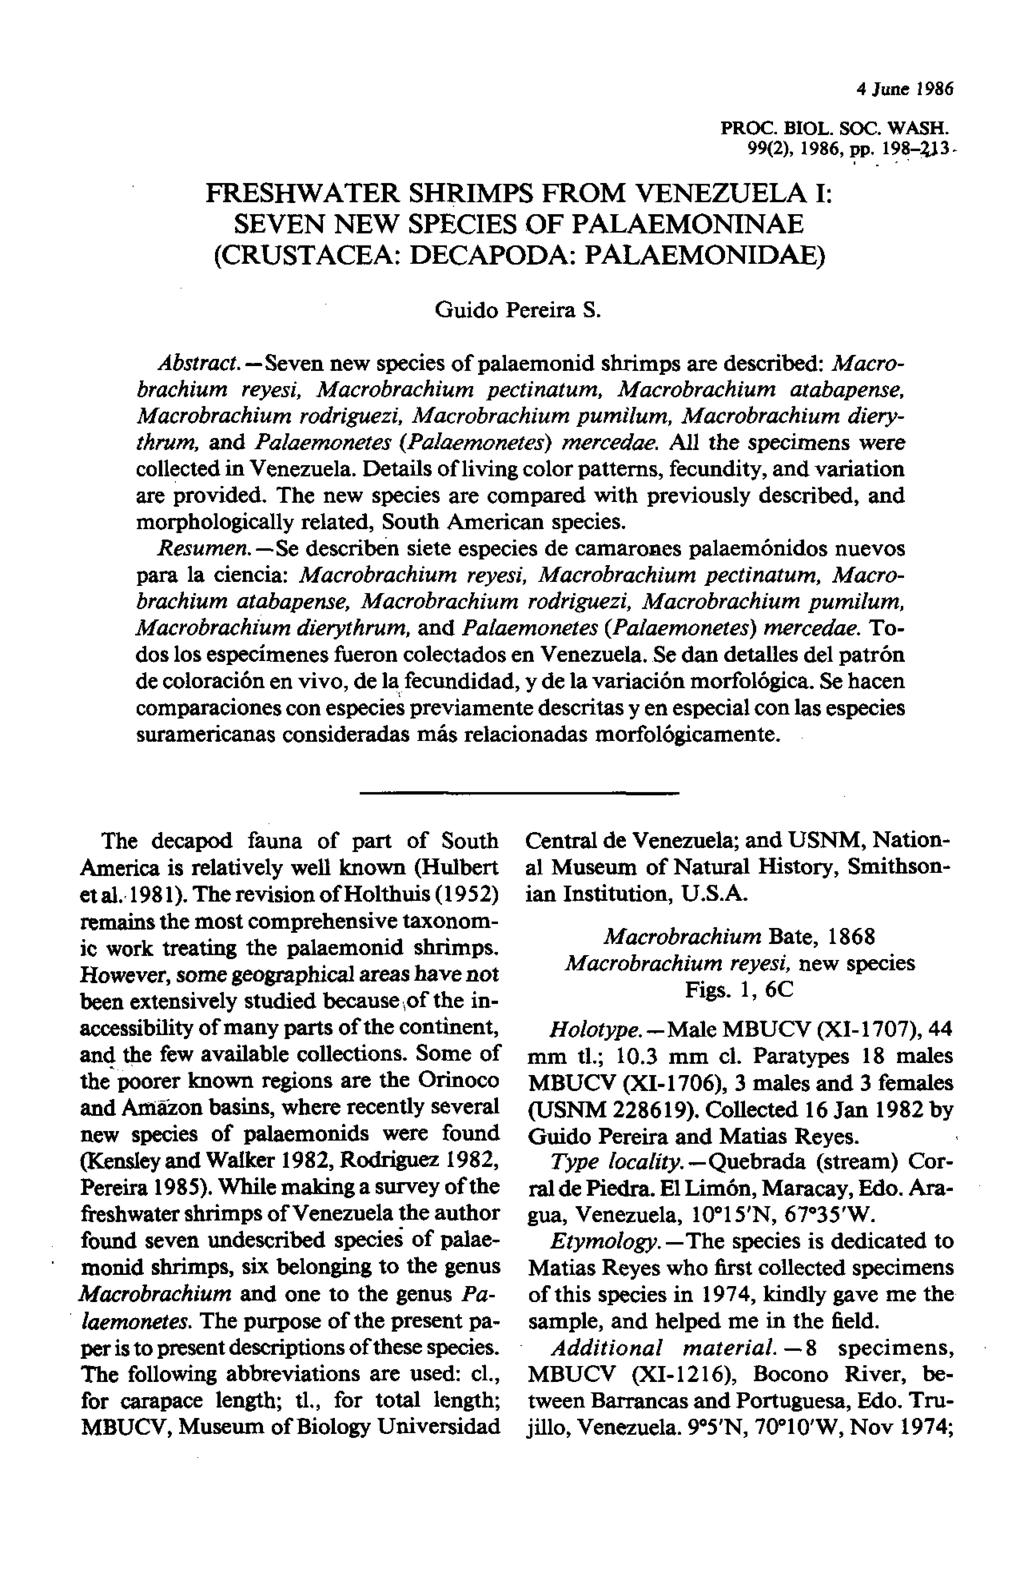 FRESHWATER SHRIMPS FROM VENEZUELA I: SEVEN NEW SPECIES OF PALAEMONINAE (CRUSTACEA: DECAPODA: PALAEMONIDAE) Guido Pereira S. 4 June 1986 PROC. BIOL. SOC. WASH. 99(2), 1986, pp. 198-2J3- Abstract.